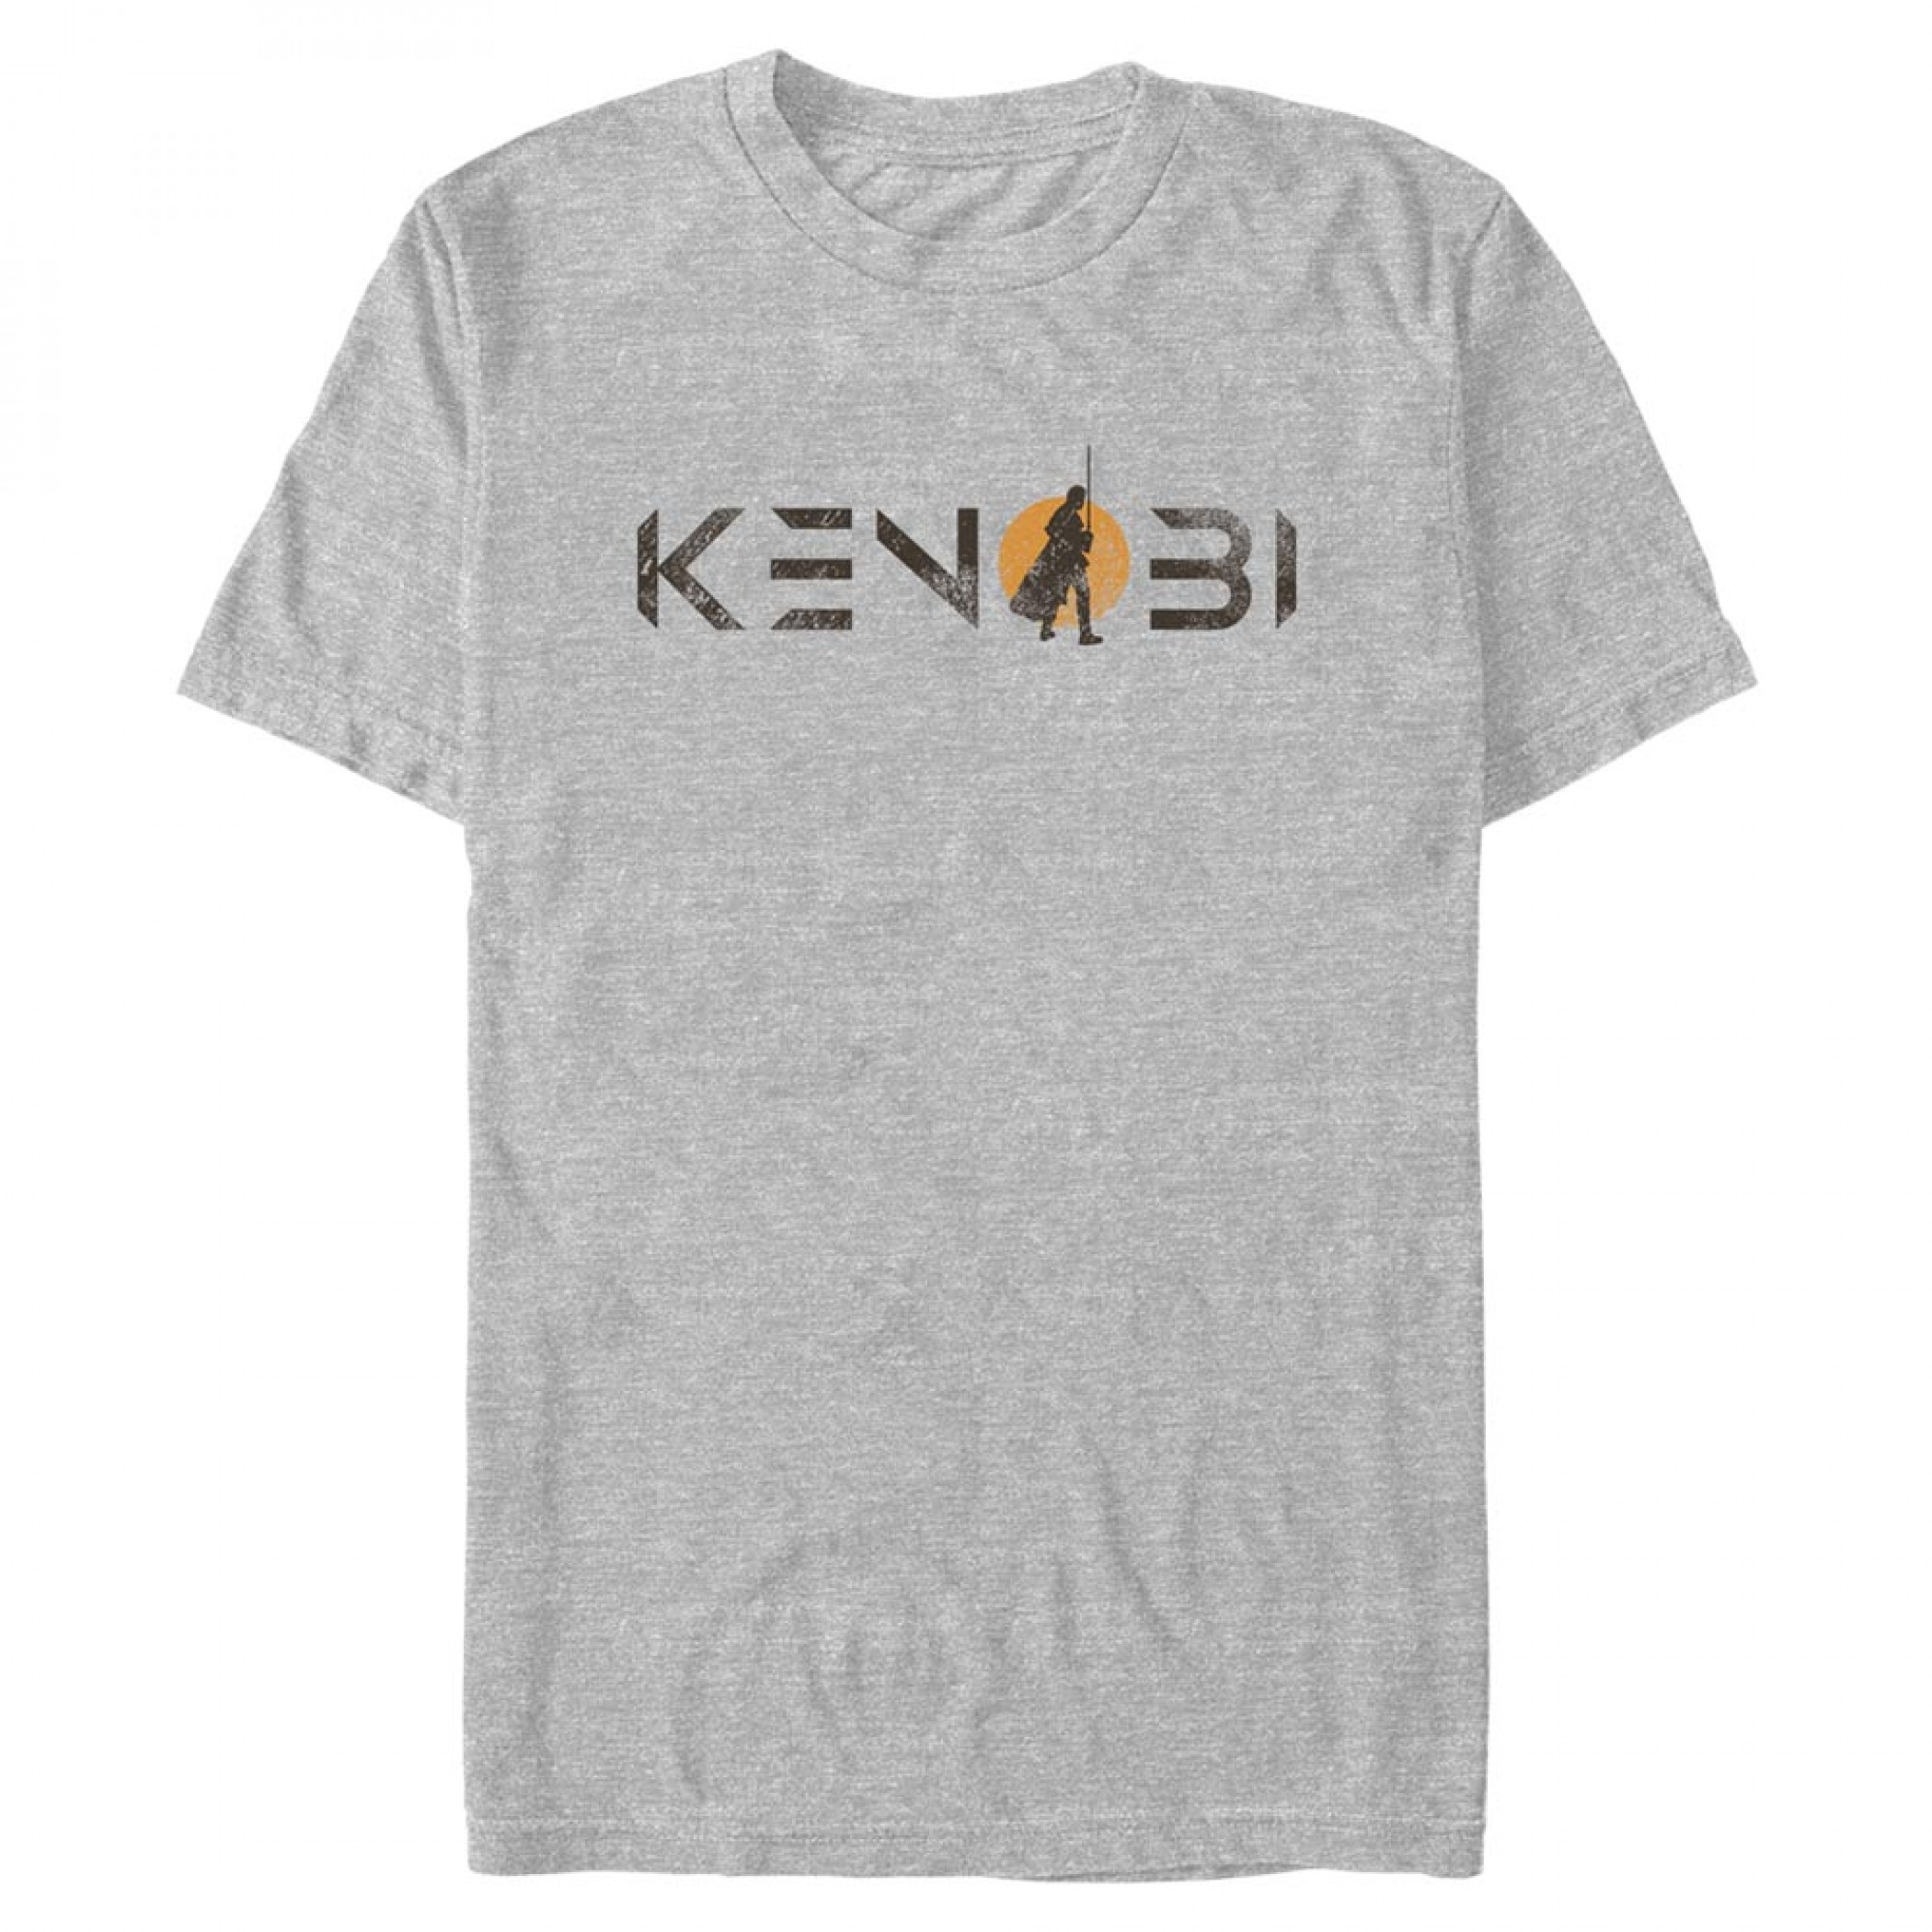 Star Wars Obi-Wan Kenobi Stylized Text and Silhouette T-Shirt